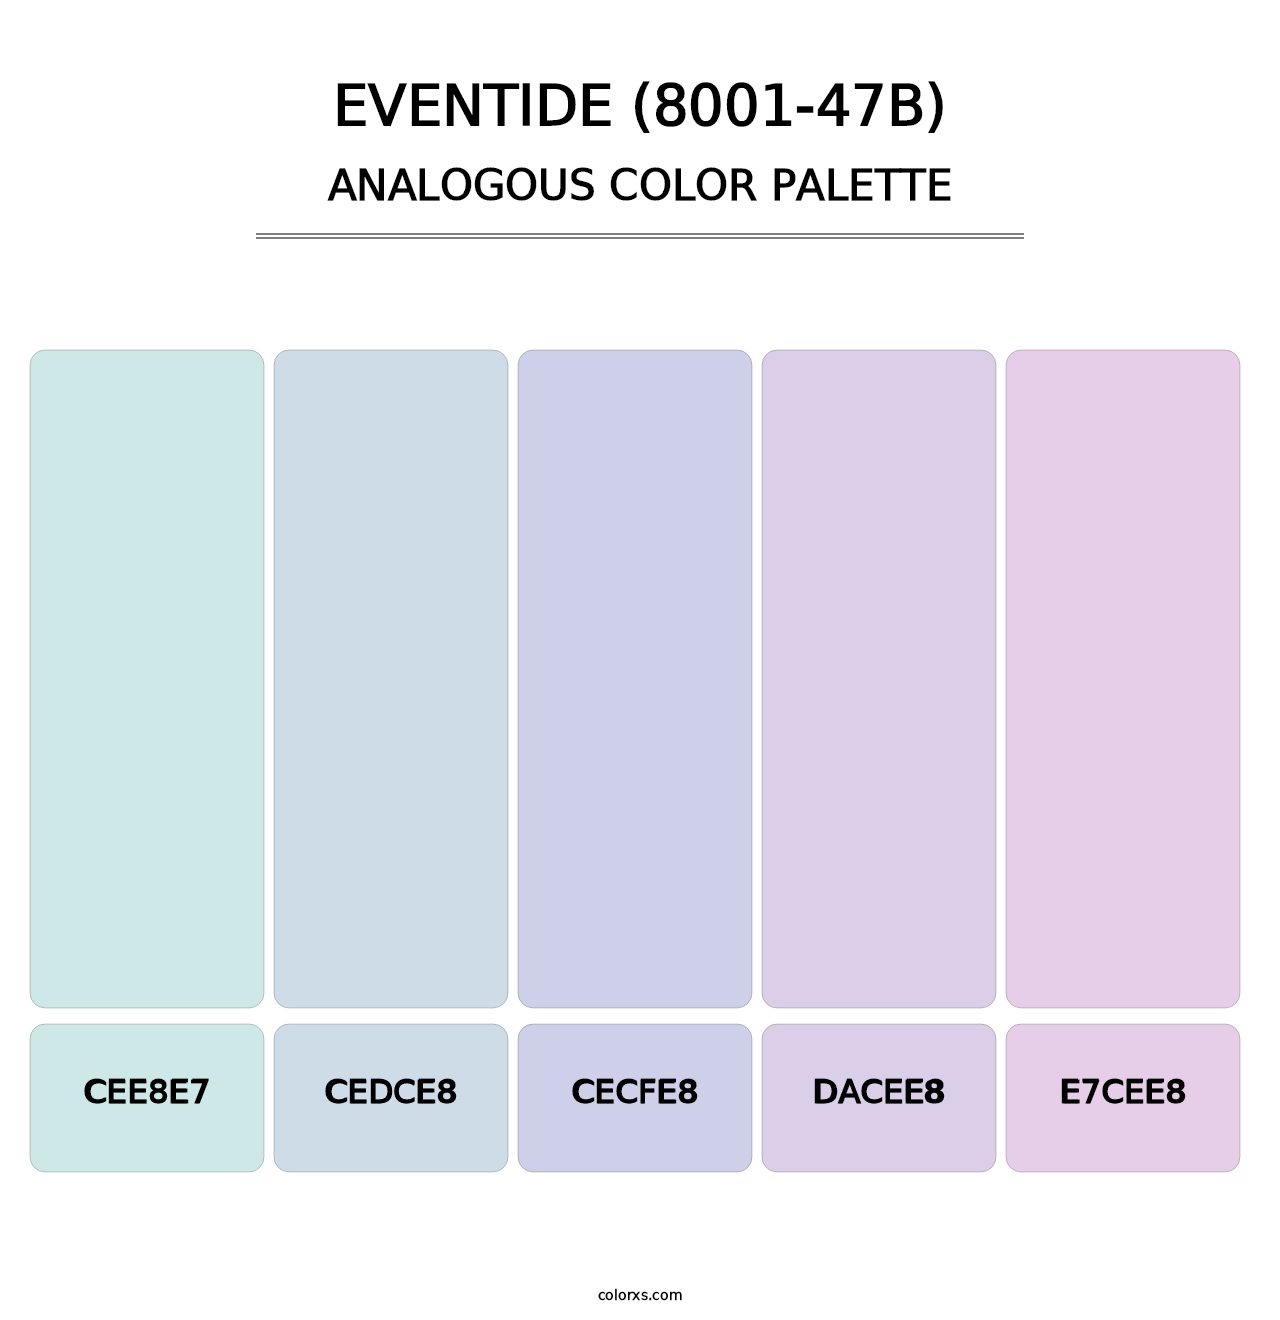 Eventide (8001-47B) - Analogous Color Palette